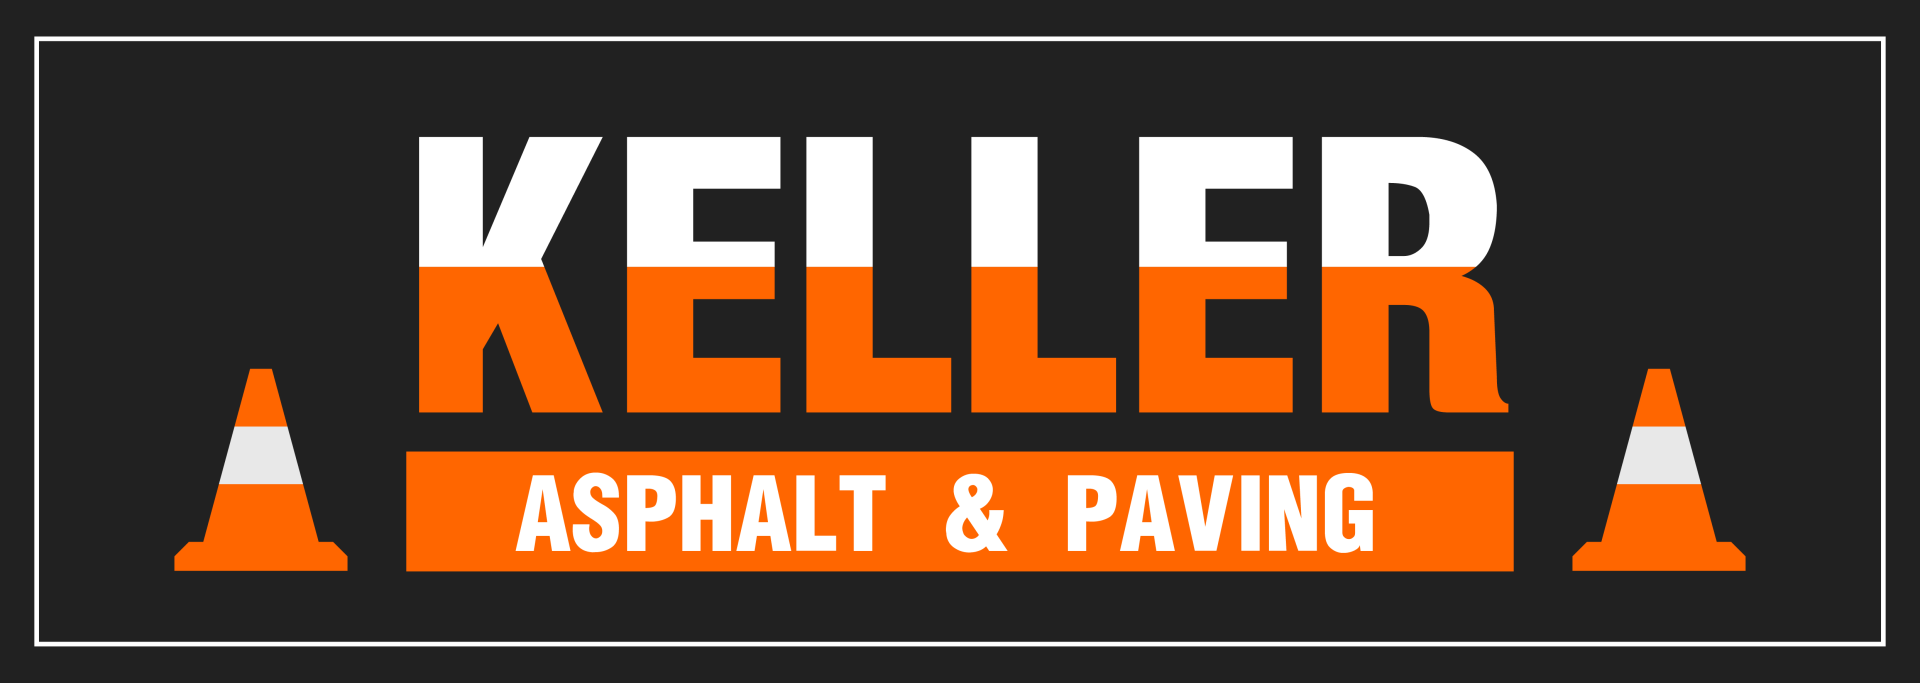 Keller Asphalt & Paving